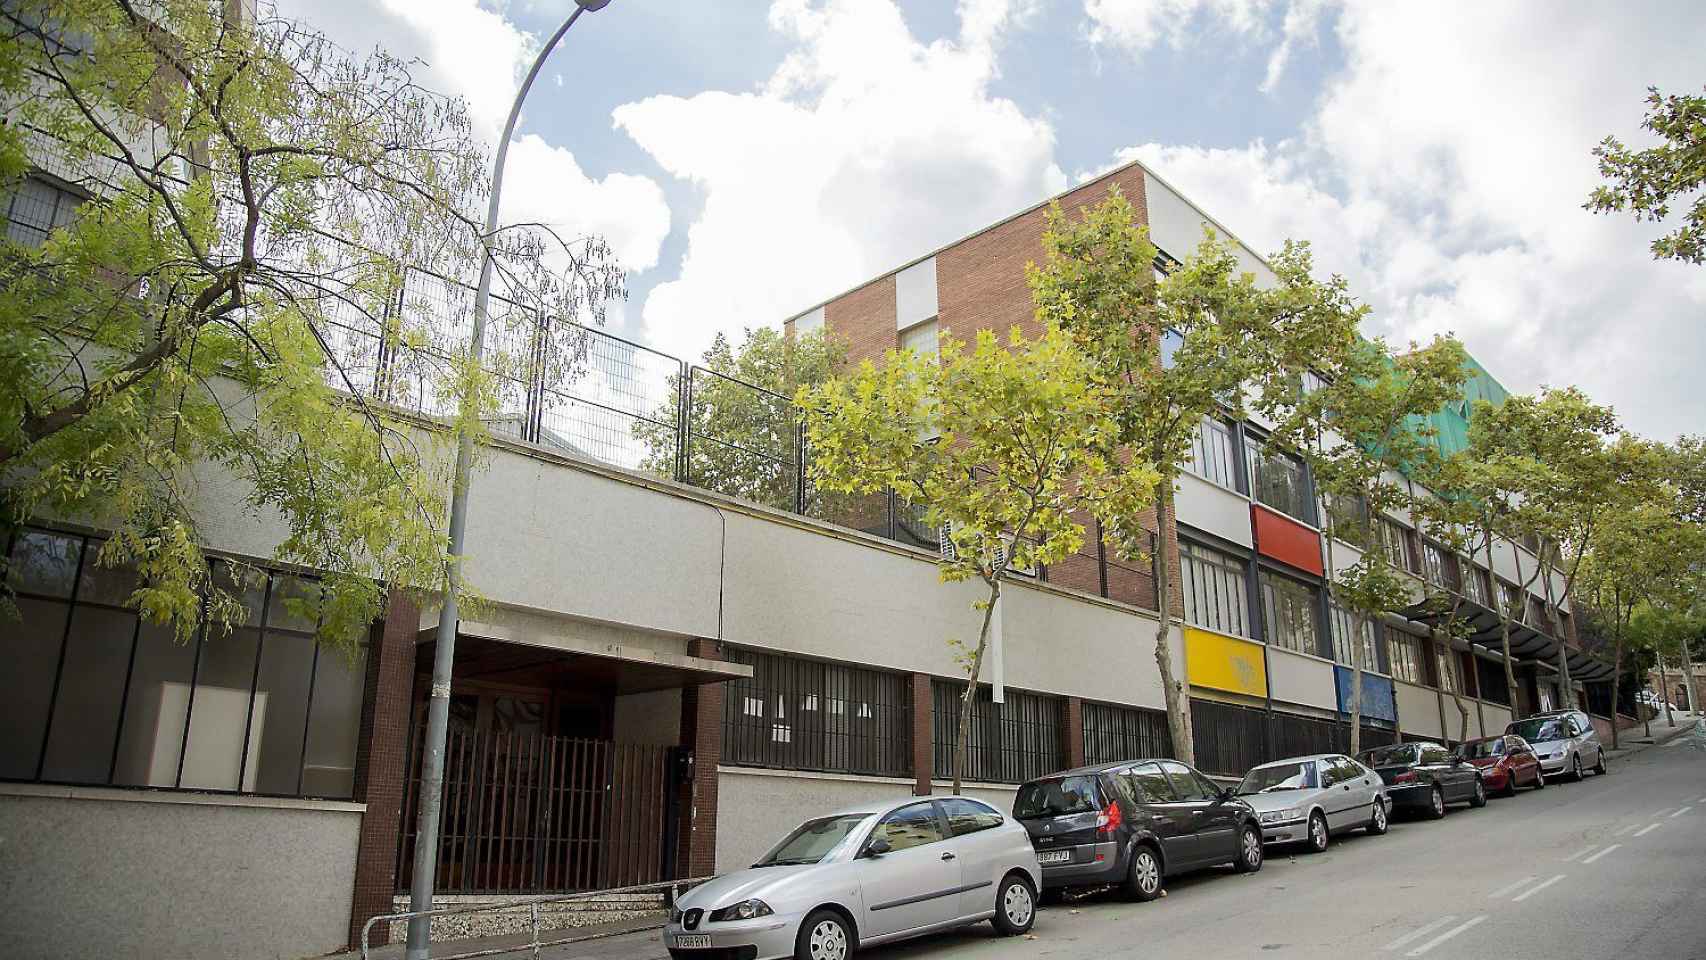 Exterior del edificio donde se grabó la serie de TV3, Merlí